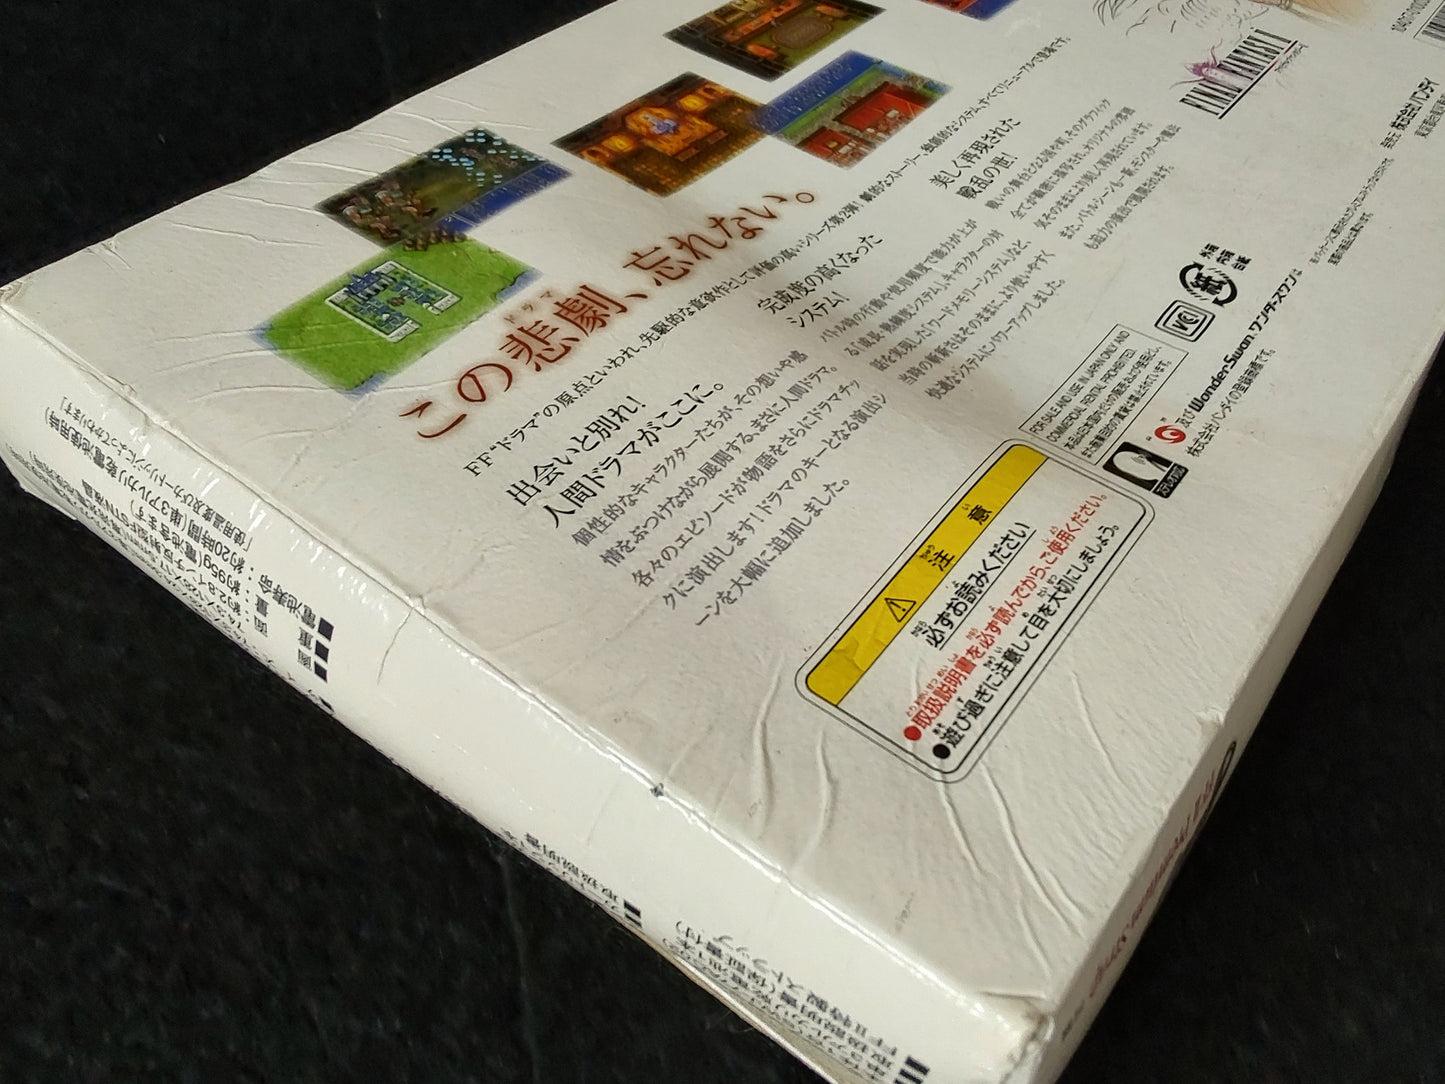 BANDAI Wonder Swan Color Final Fantasy 2 Limited model console Boxes set-f0808-